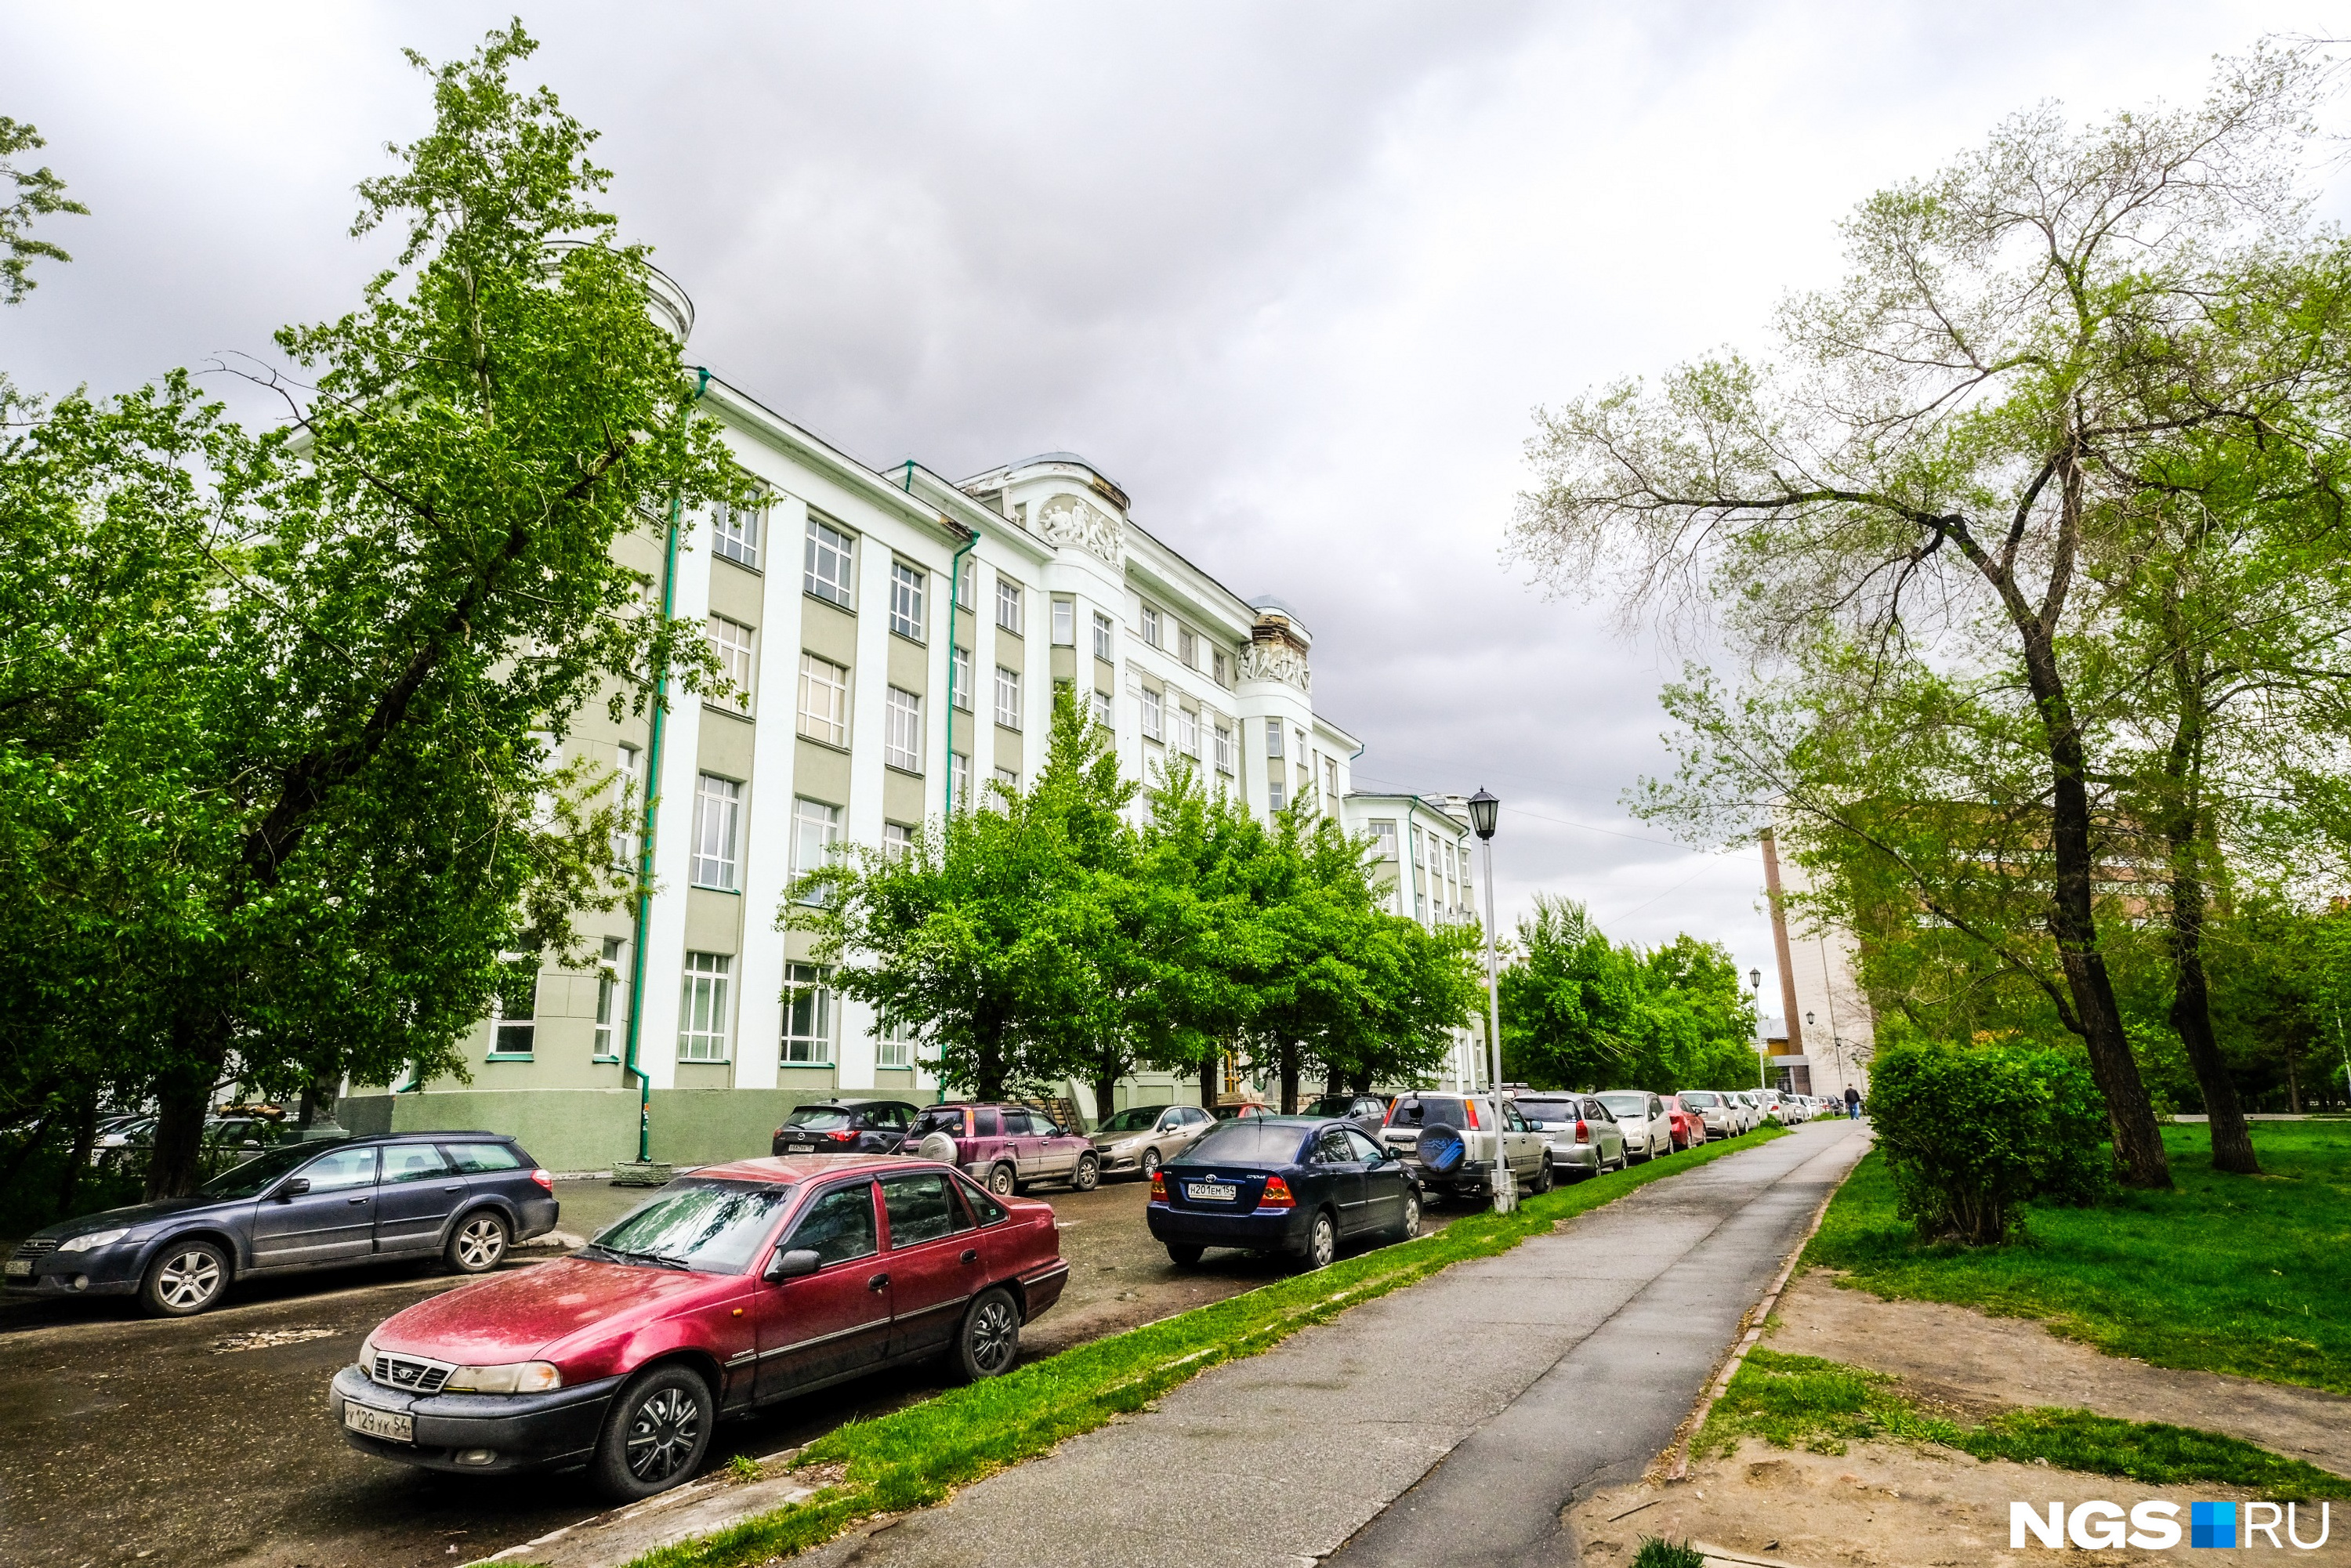 Преступники угоняли автомобили с парковок в центре Новосибирска 